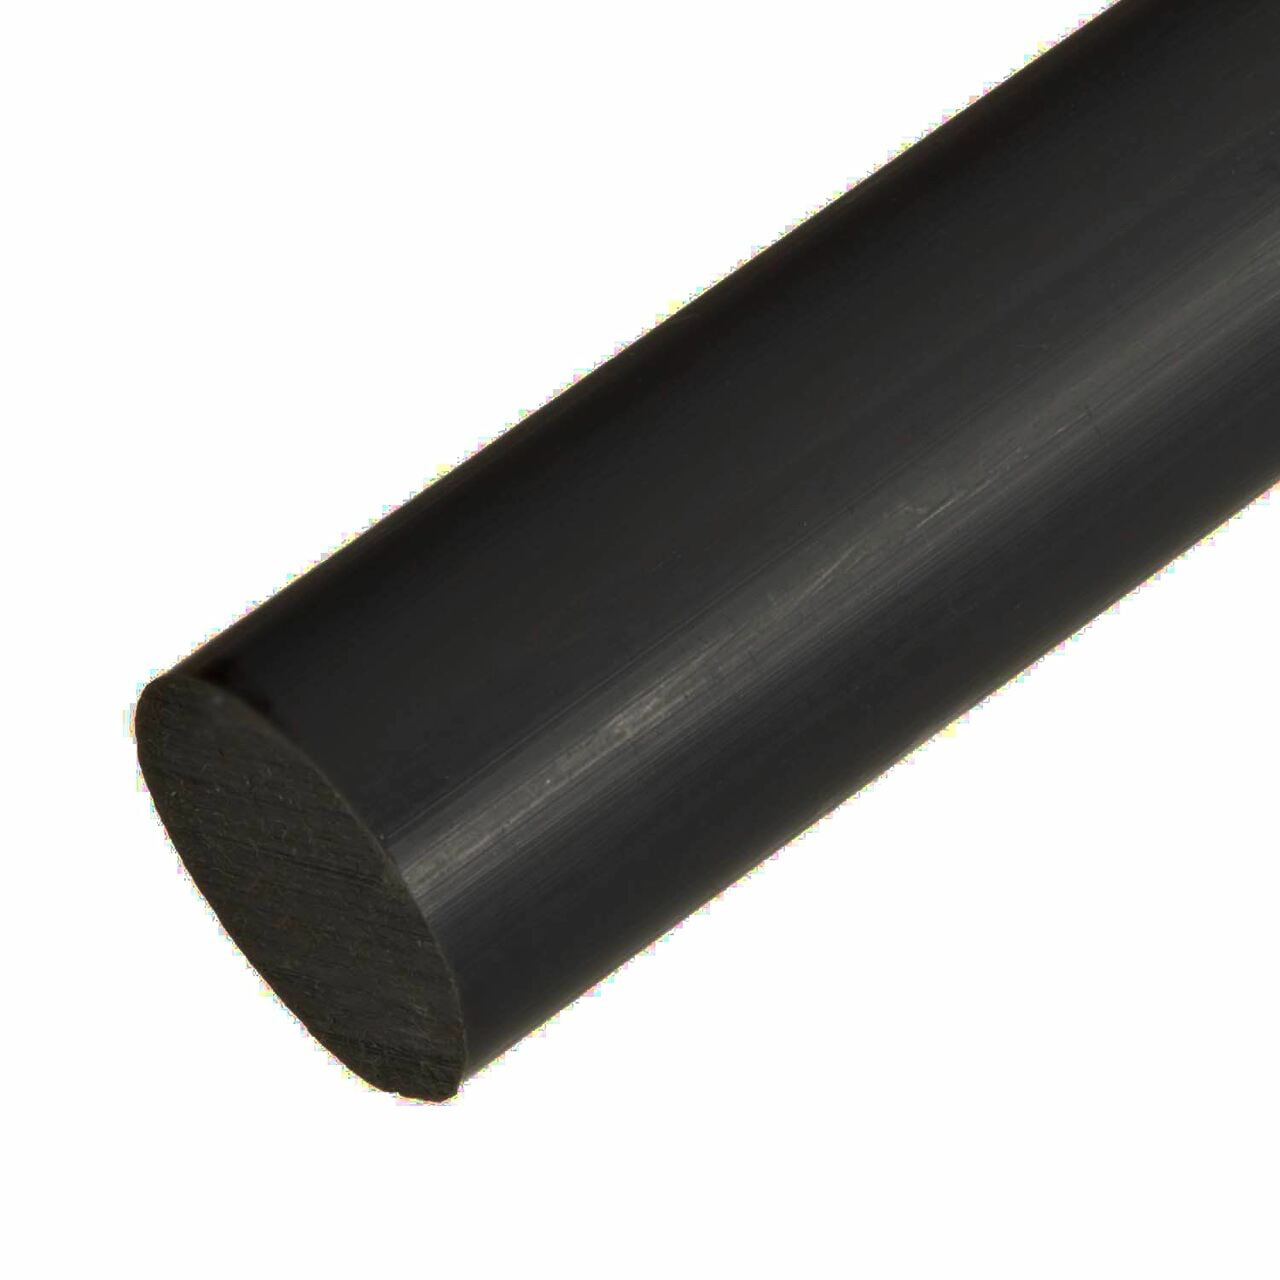 White Color Acetal Copolymer Plastic Round Rod 7/8 Diameter 12 Length 